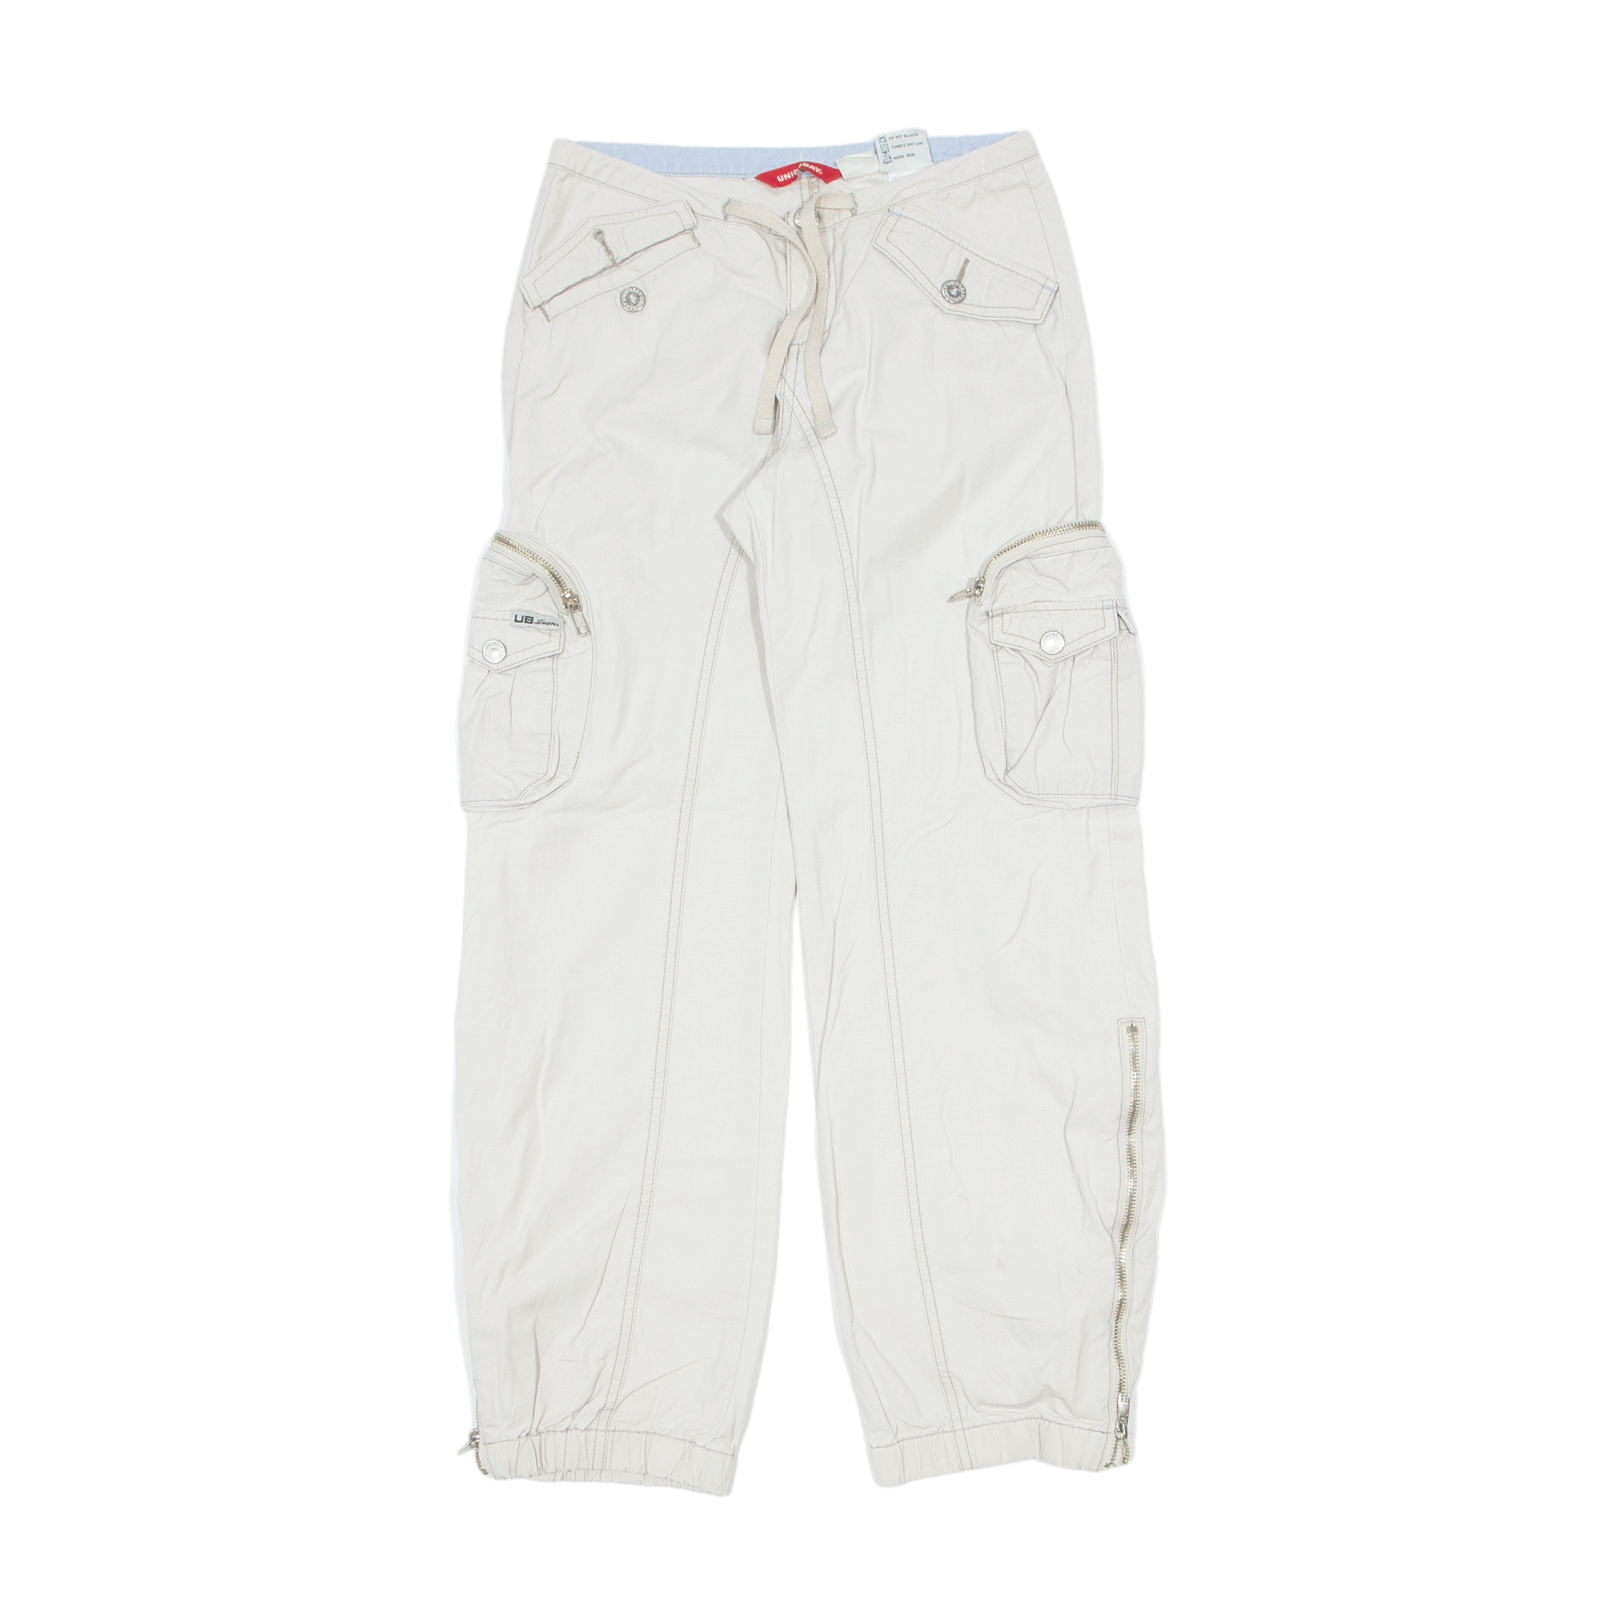 Unionbay cargo pants womens - Gem